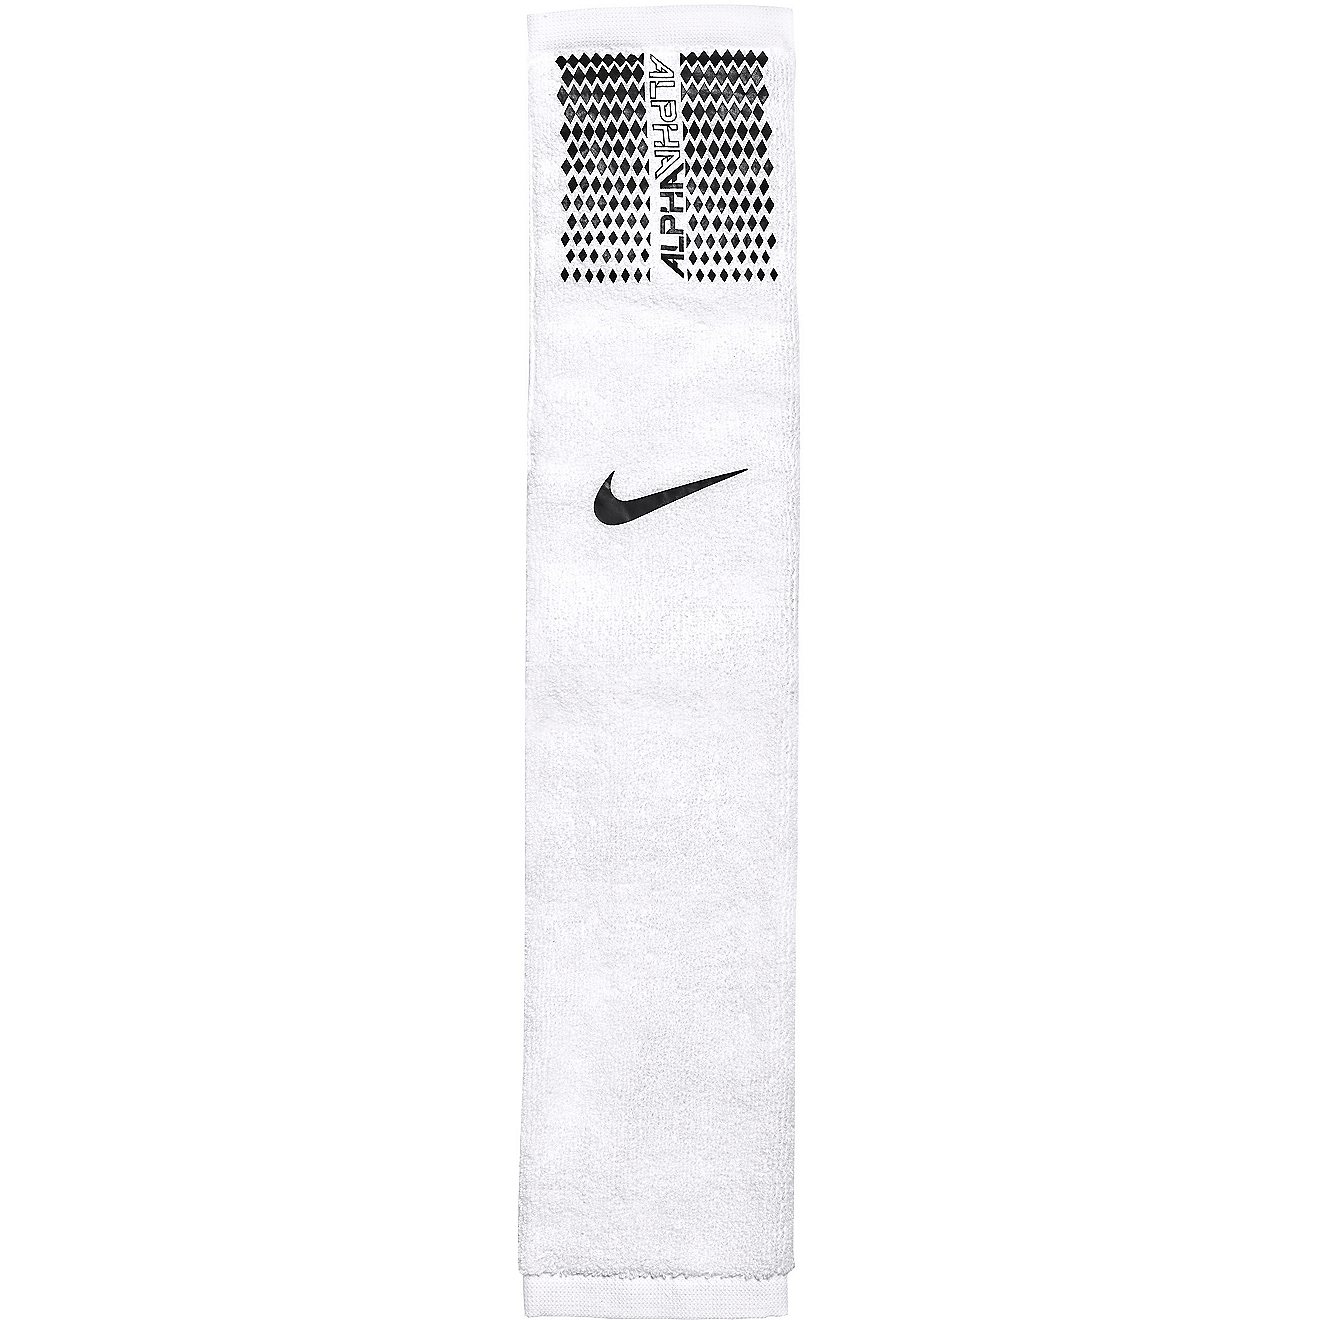 Nike Alpha Football Towel | Free Shipping at Academy